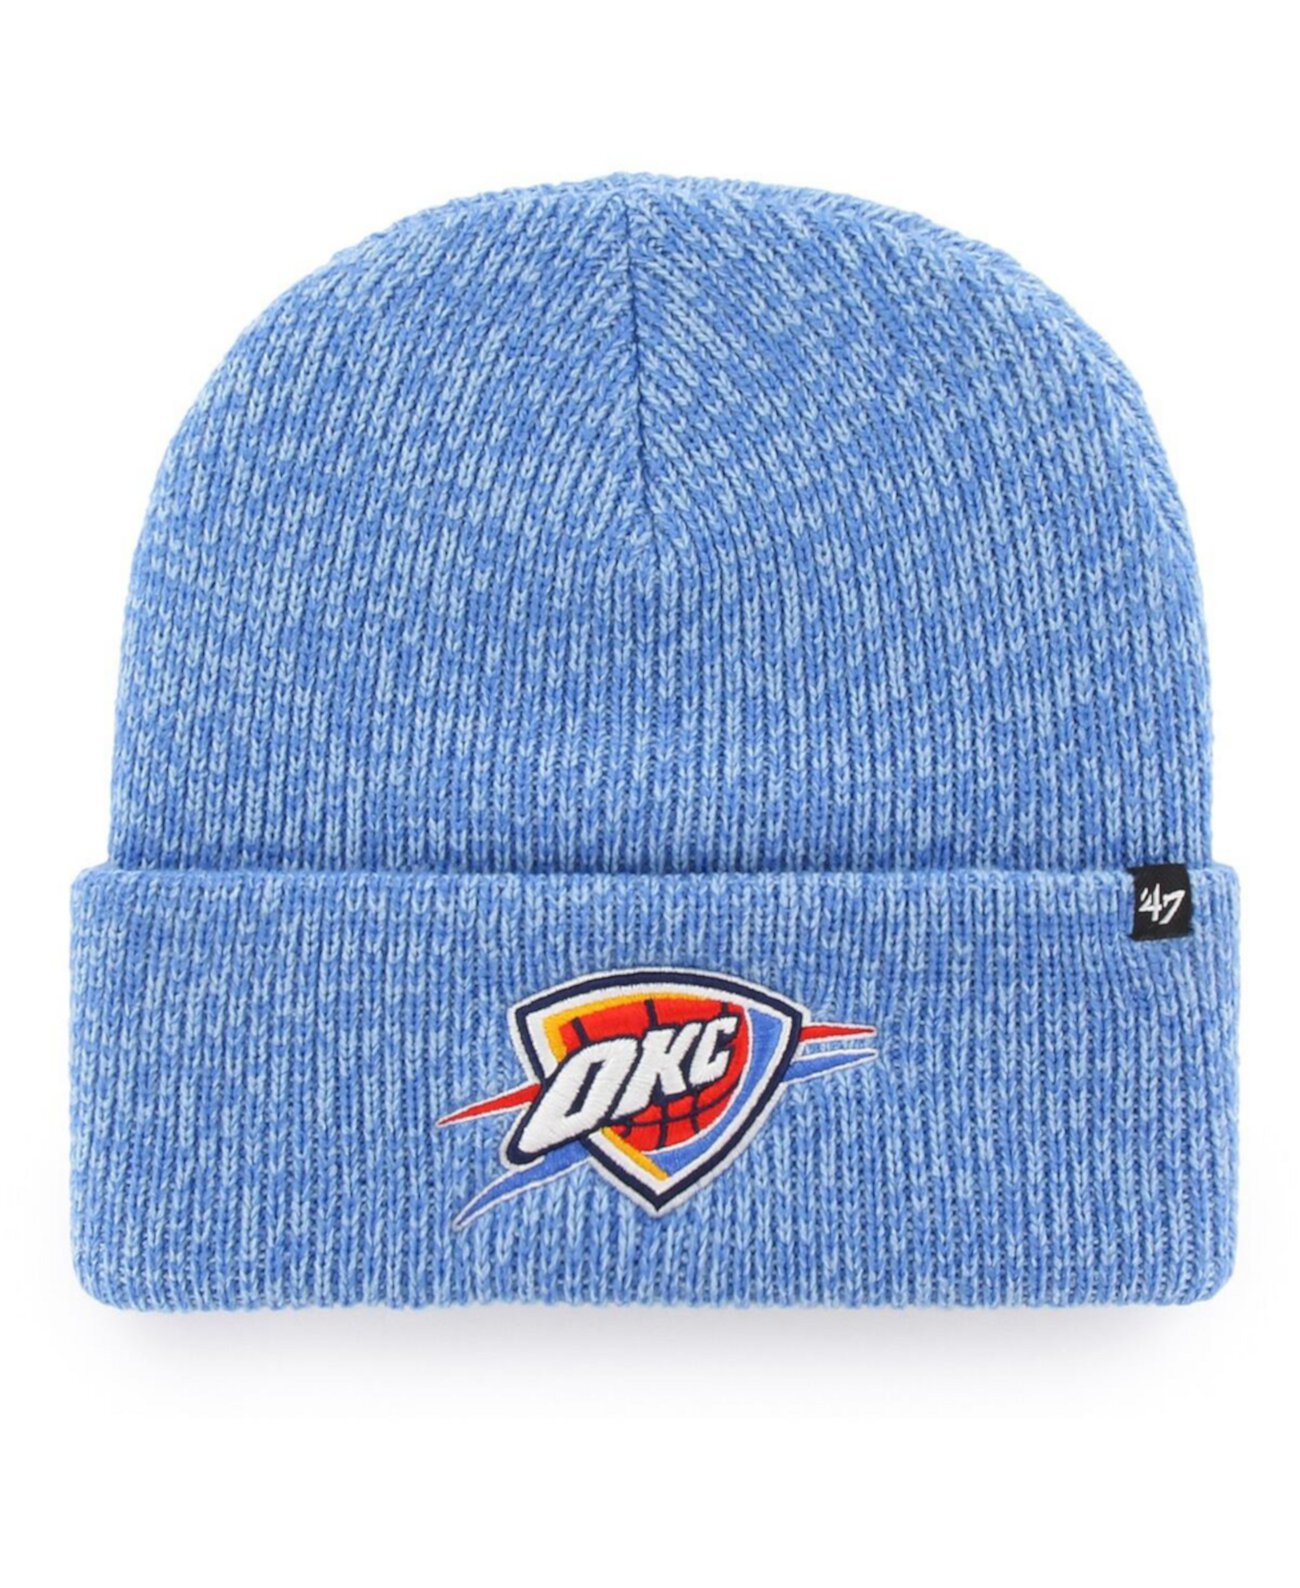 Brain 47. Шапка '47 brand Philadelphia. Light Blue hat New York шапка. Шапка NY 47. Шапка вязаная мужская синяя.